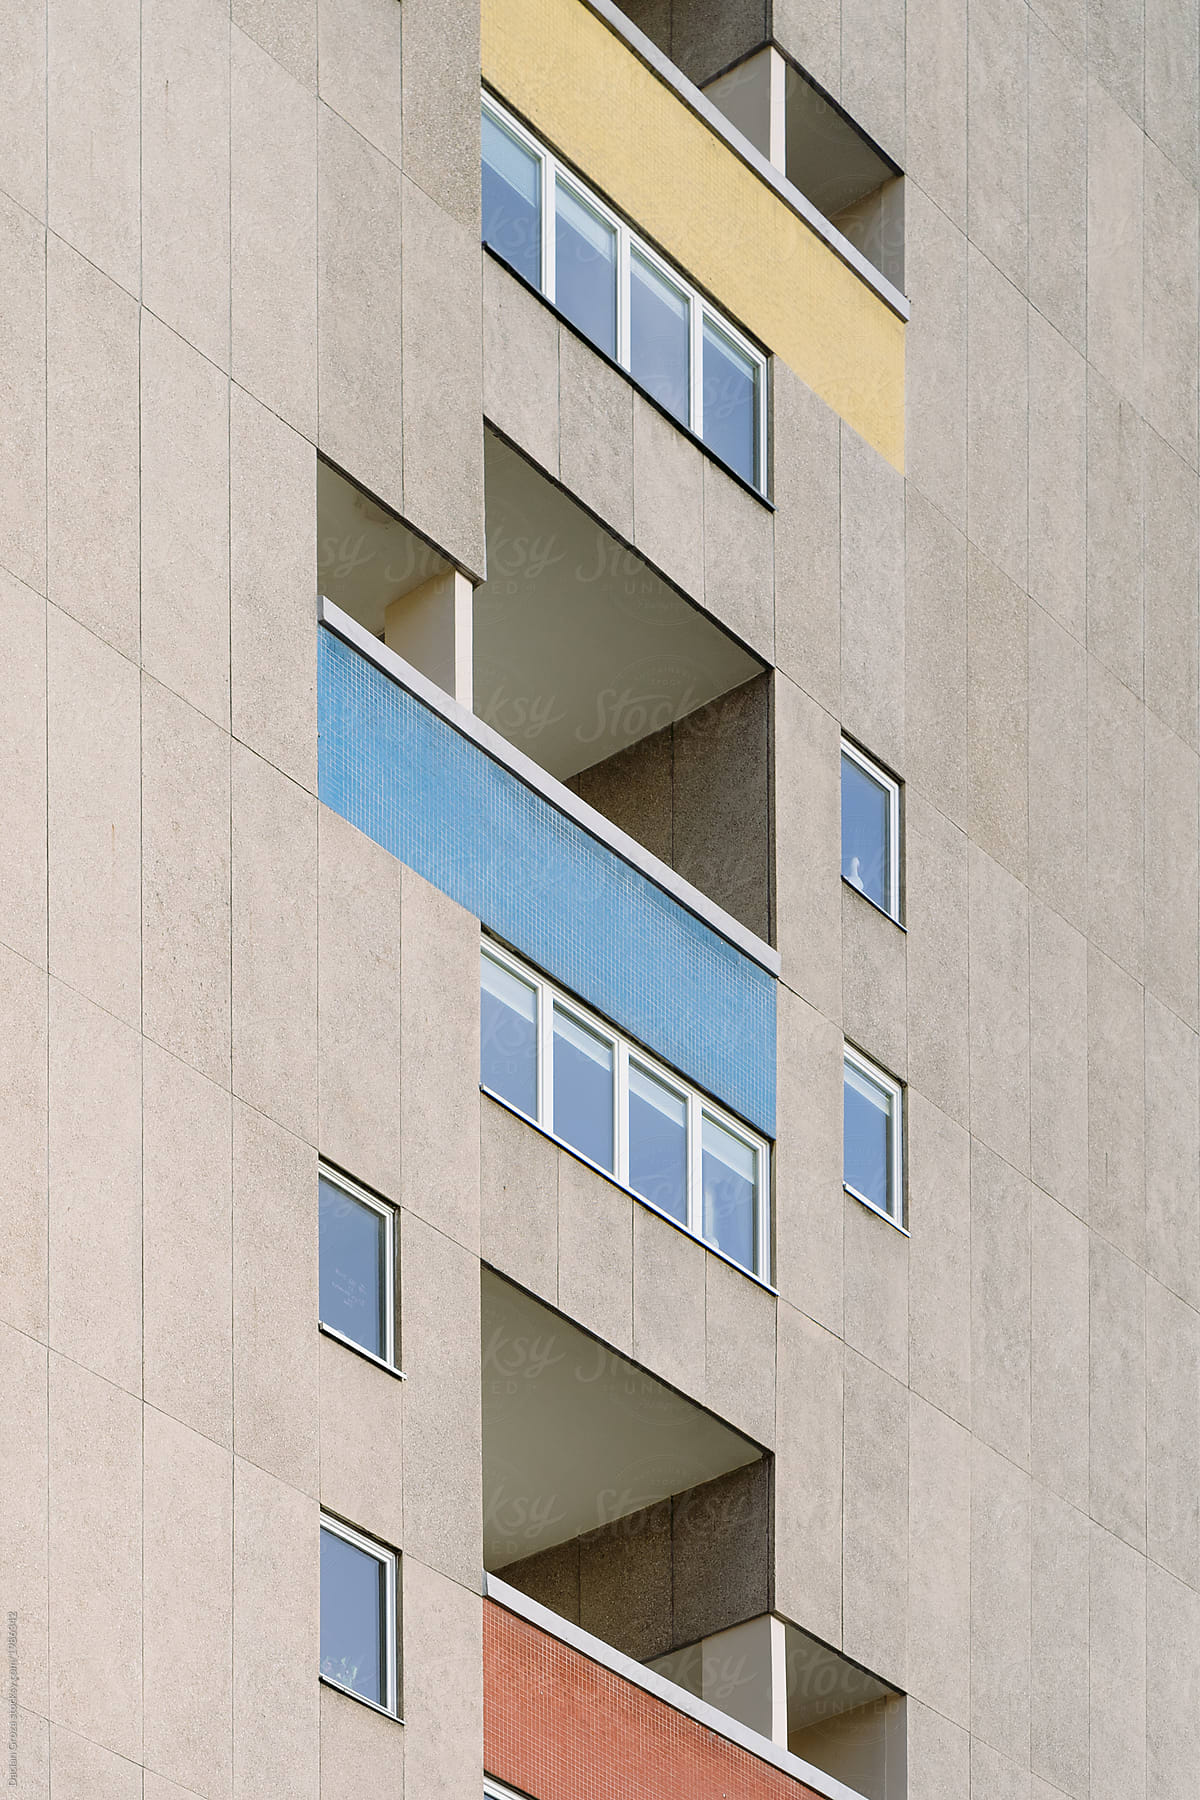 Geometric Pattern of Windows